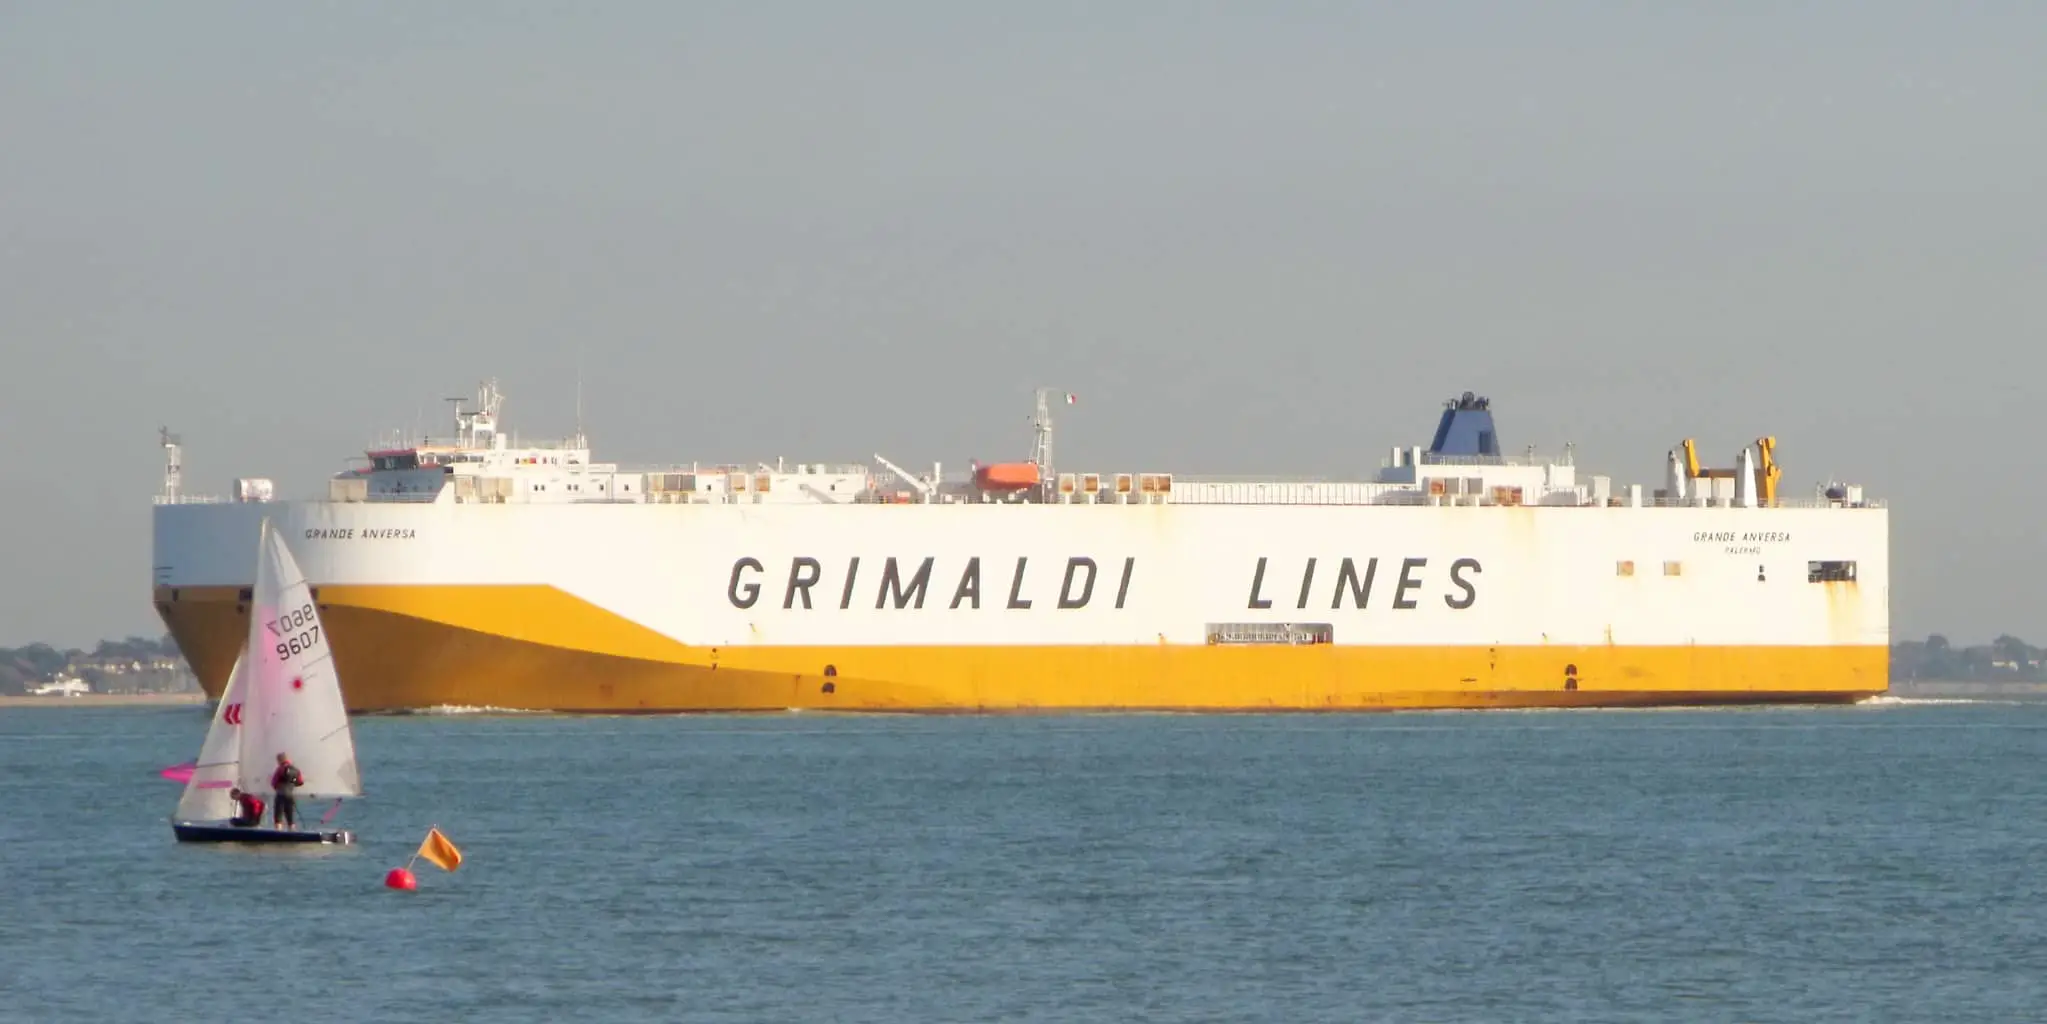 Grimaldi Lines ship in the solent